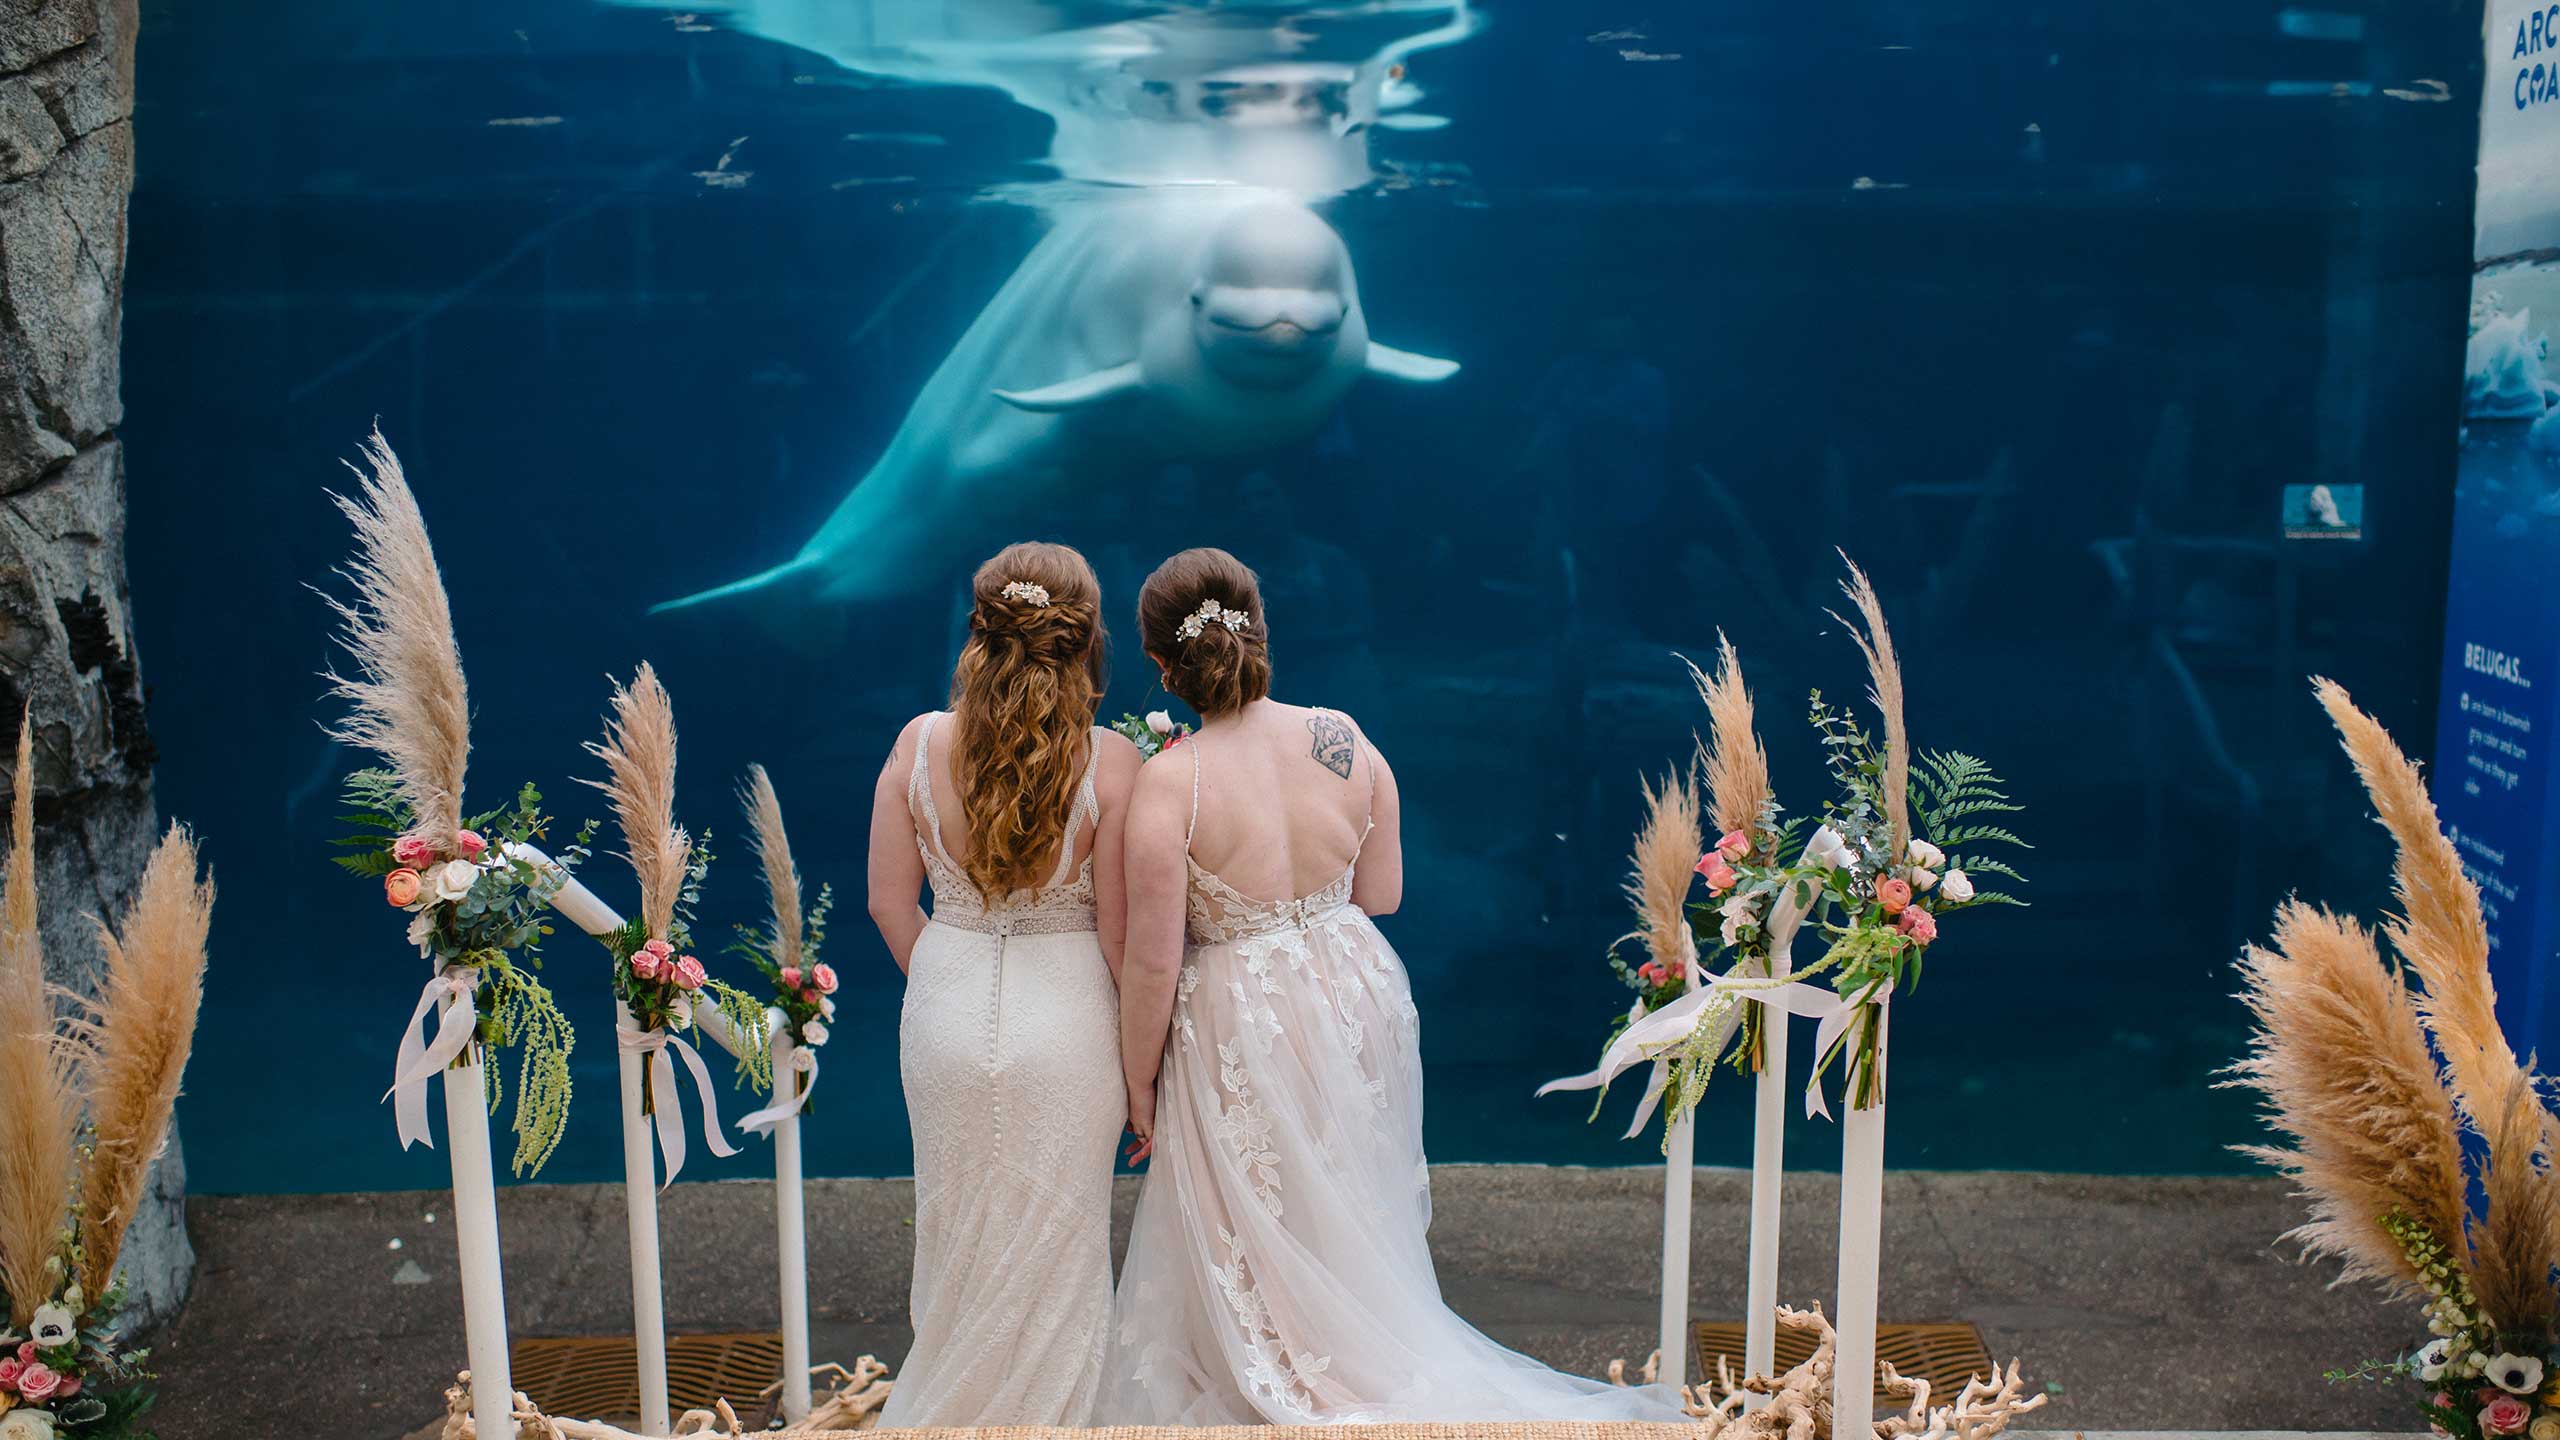 Brides overlooking beluga whale